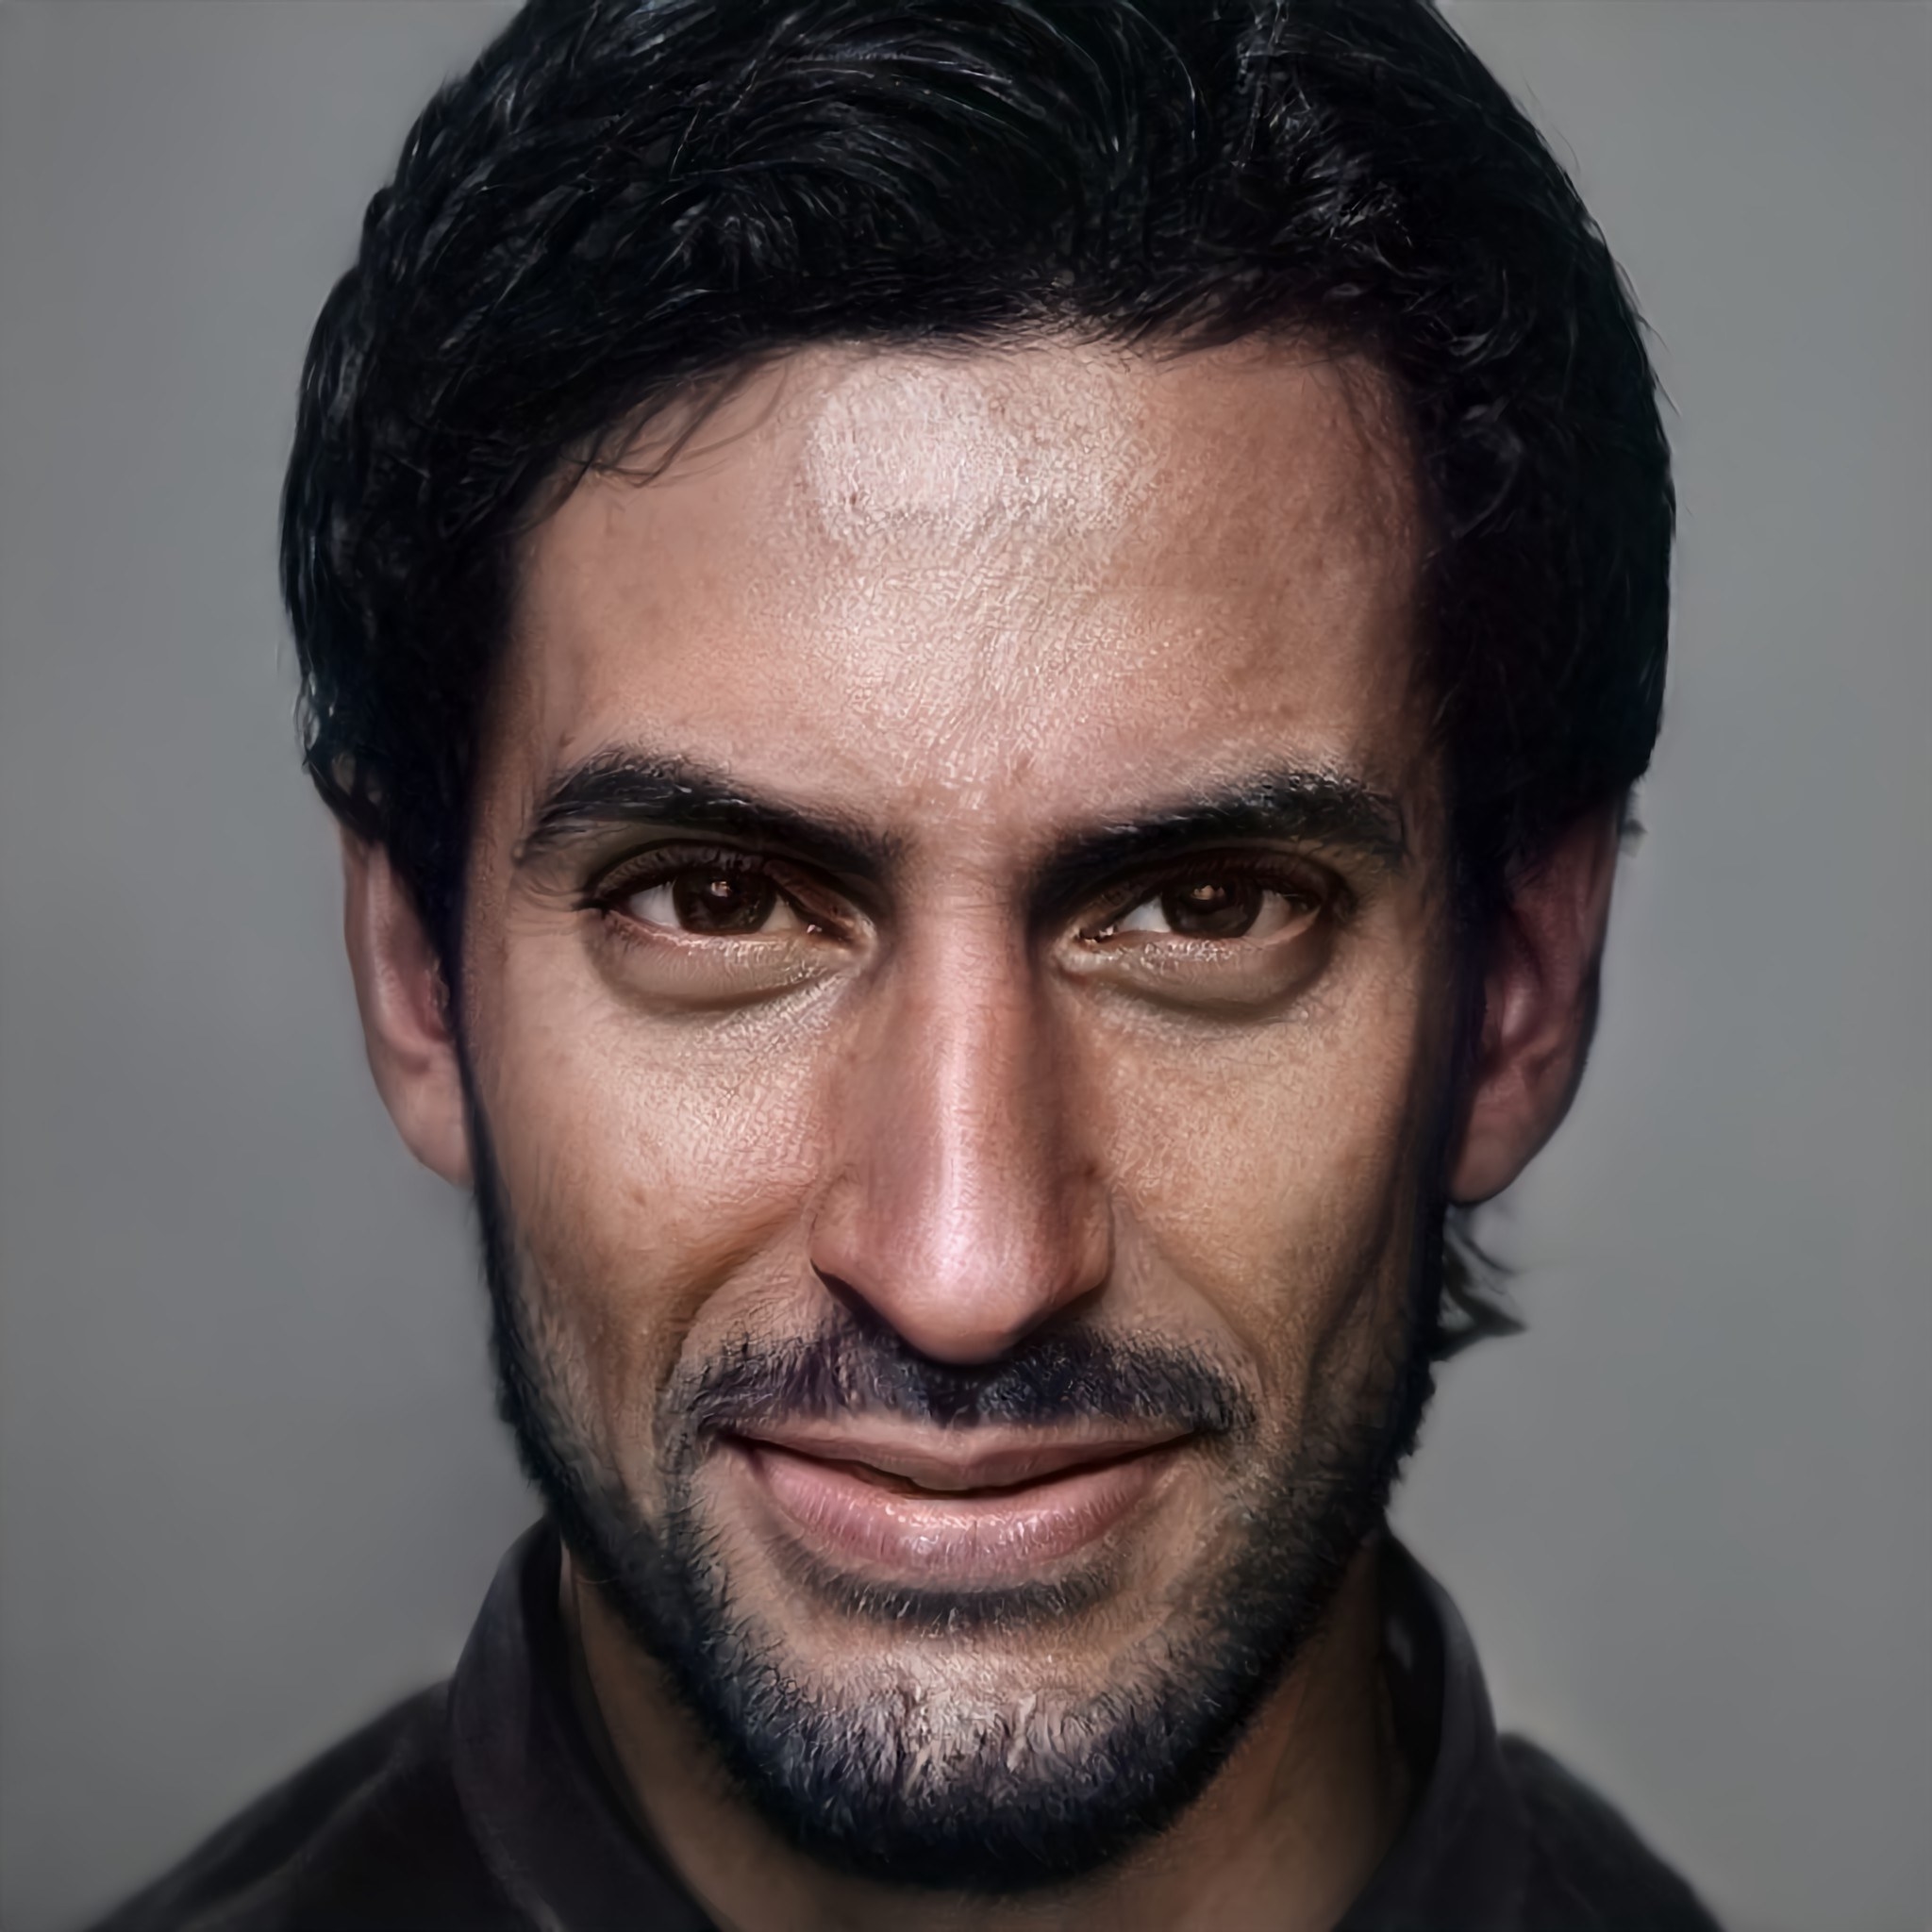 jafar with a long face, facial hair and dark hair